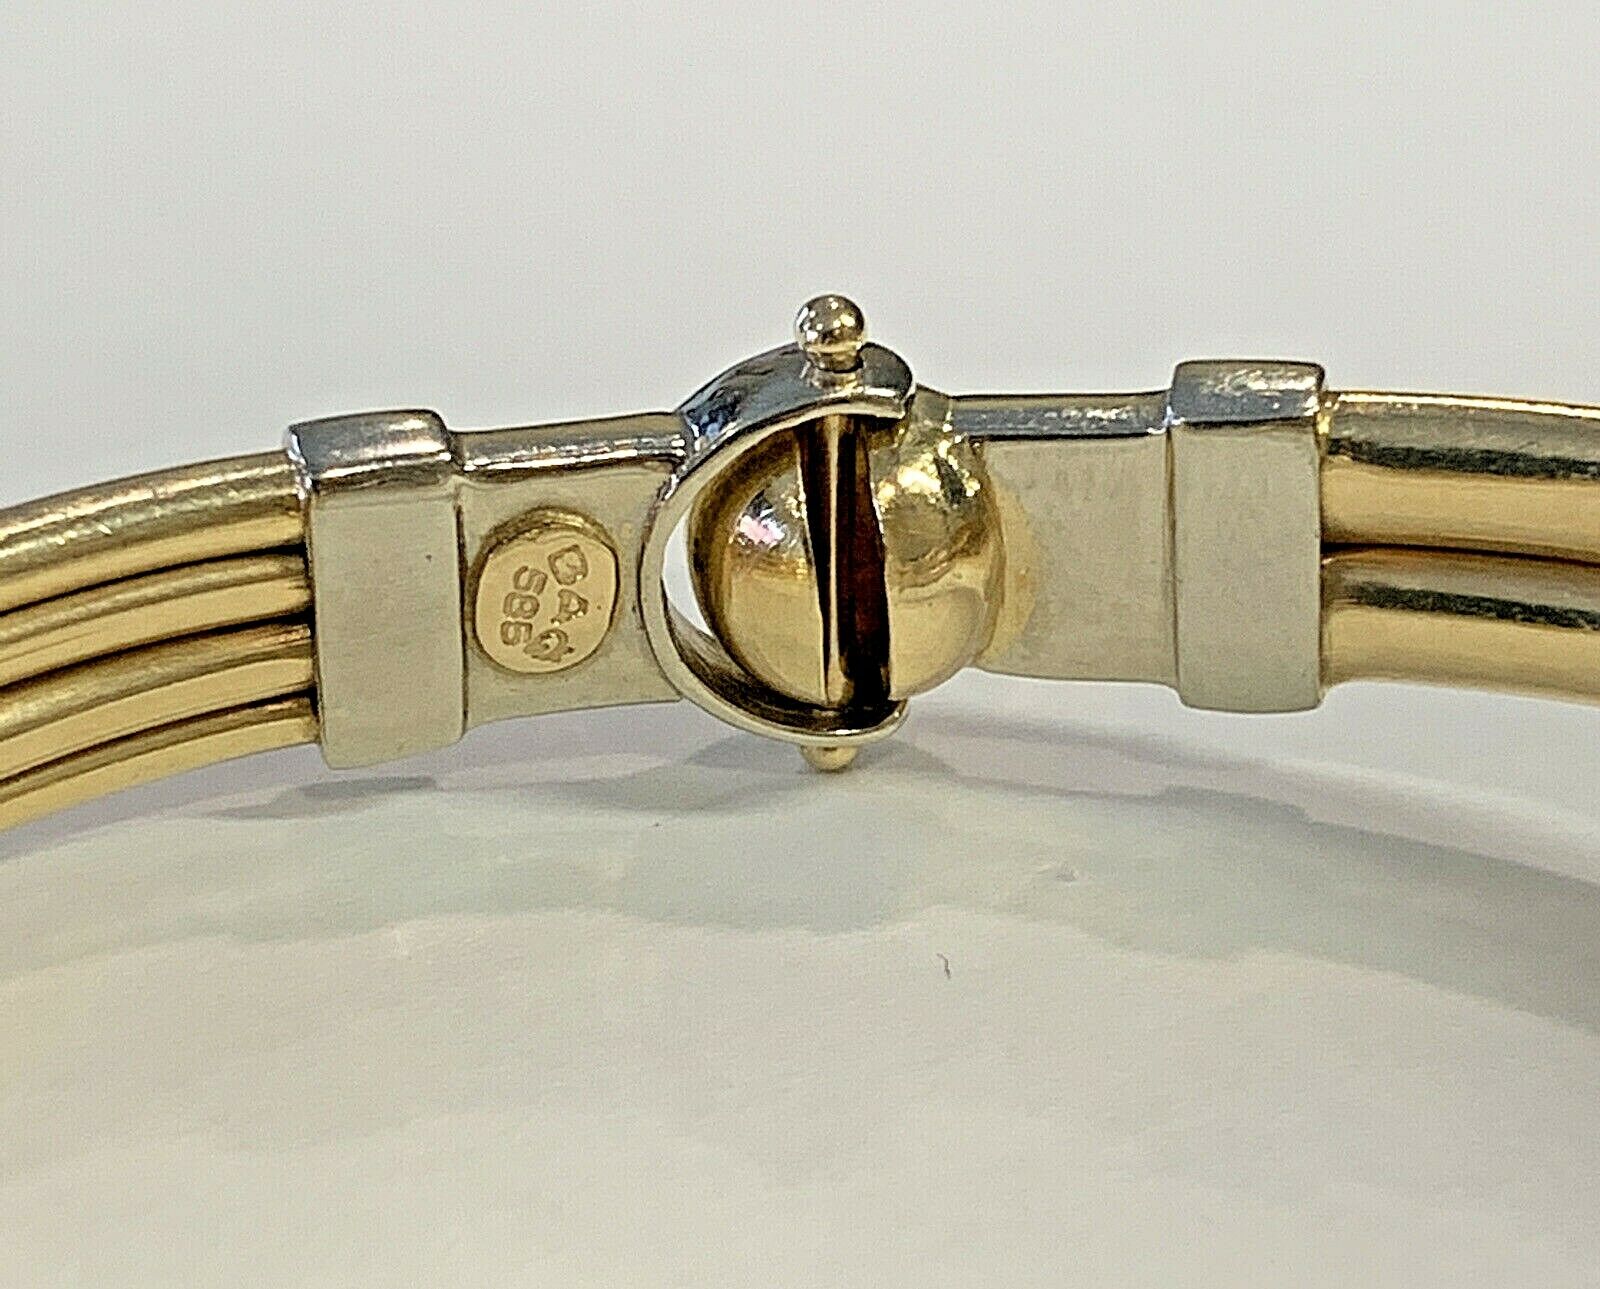 14k Gold Ladies Bracelet - 26.0 Grams - 8.3mm - 7 3/4 - 8"